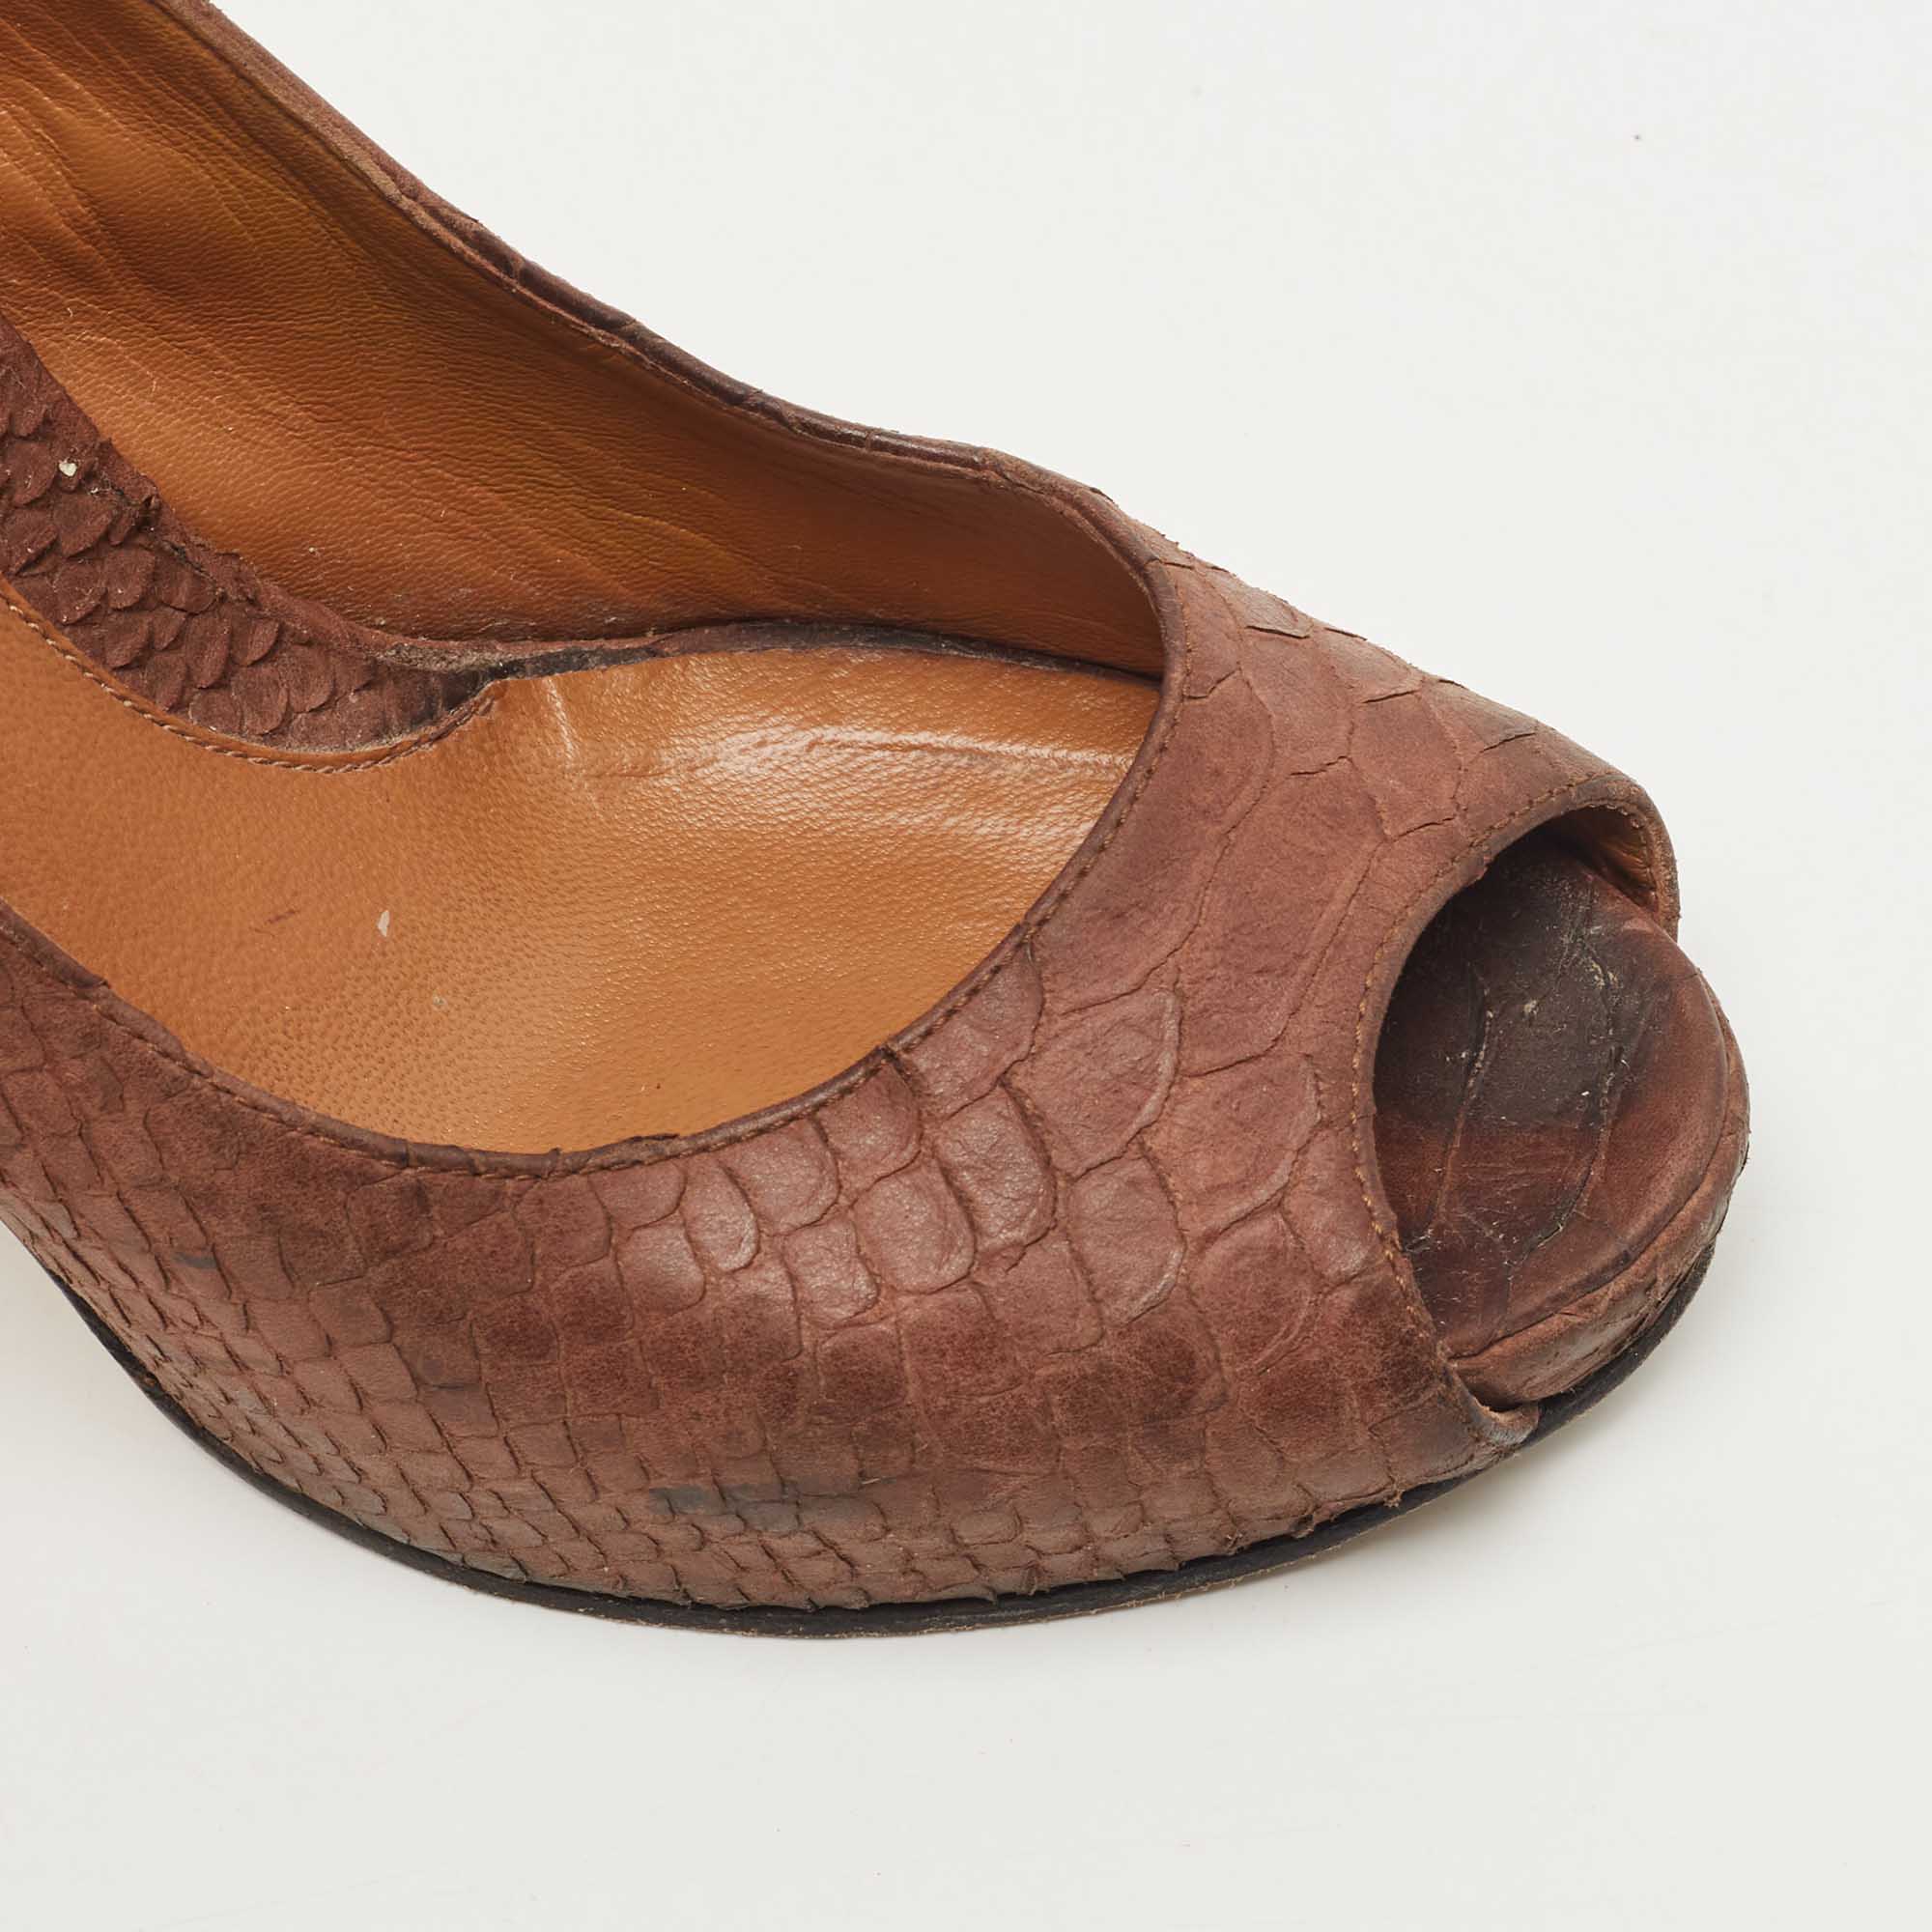 Fendi Brown Python Embossed Leather Peep Toe Platform Pumps Size 38.5